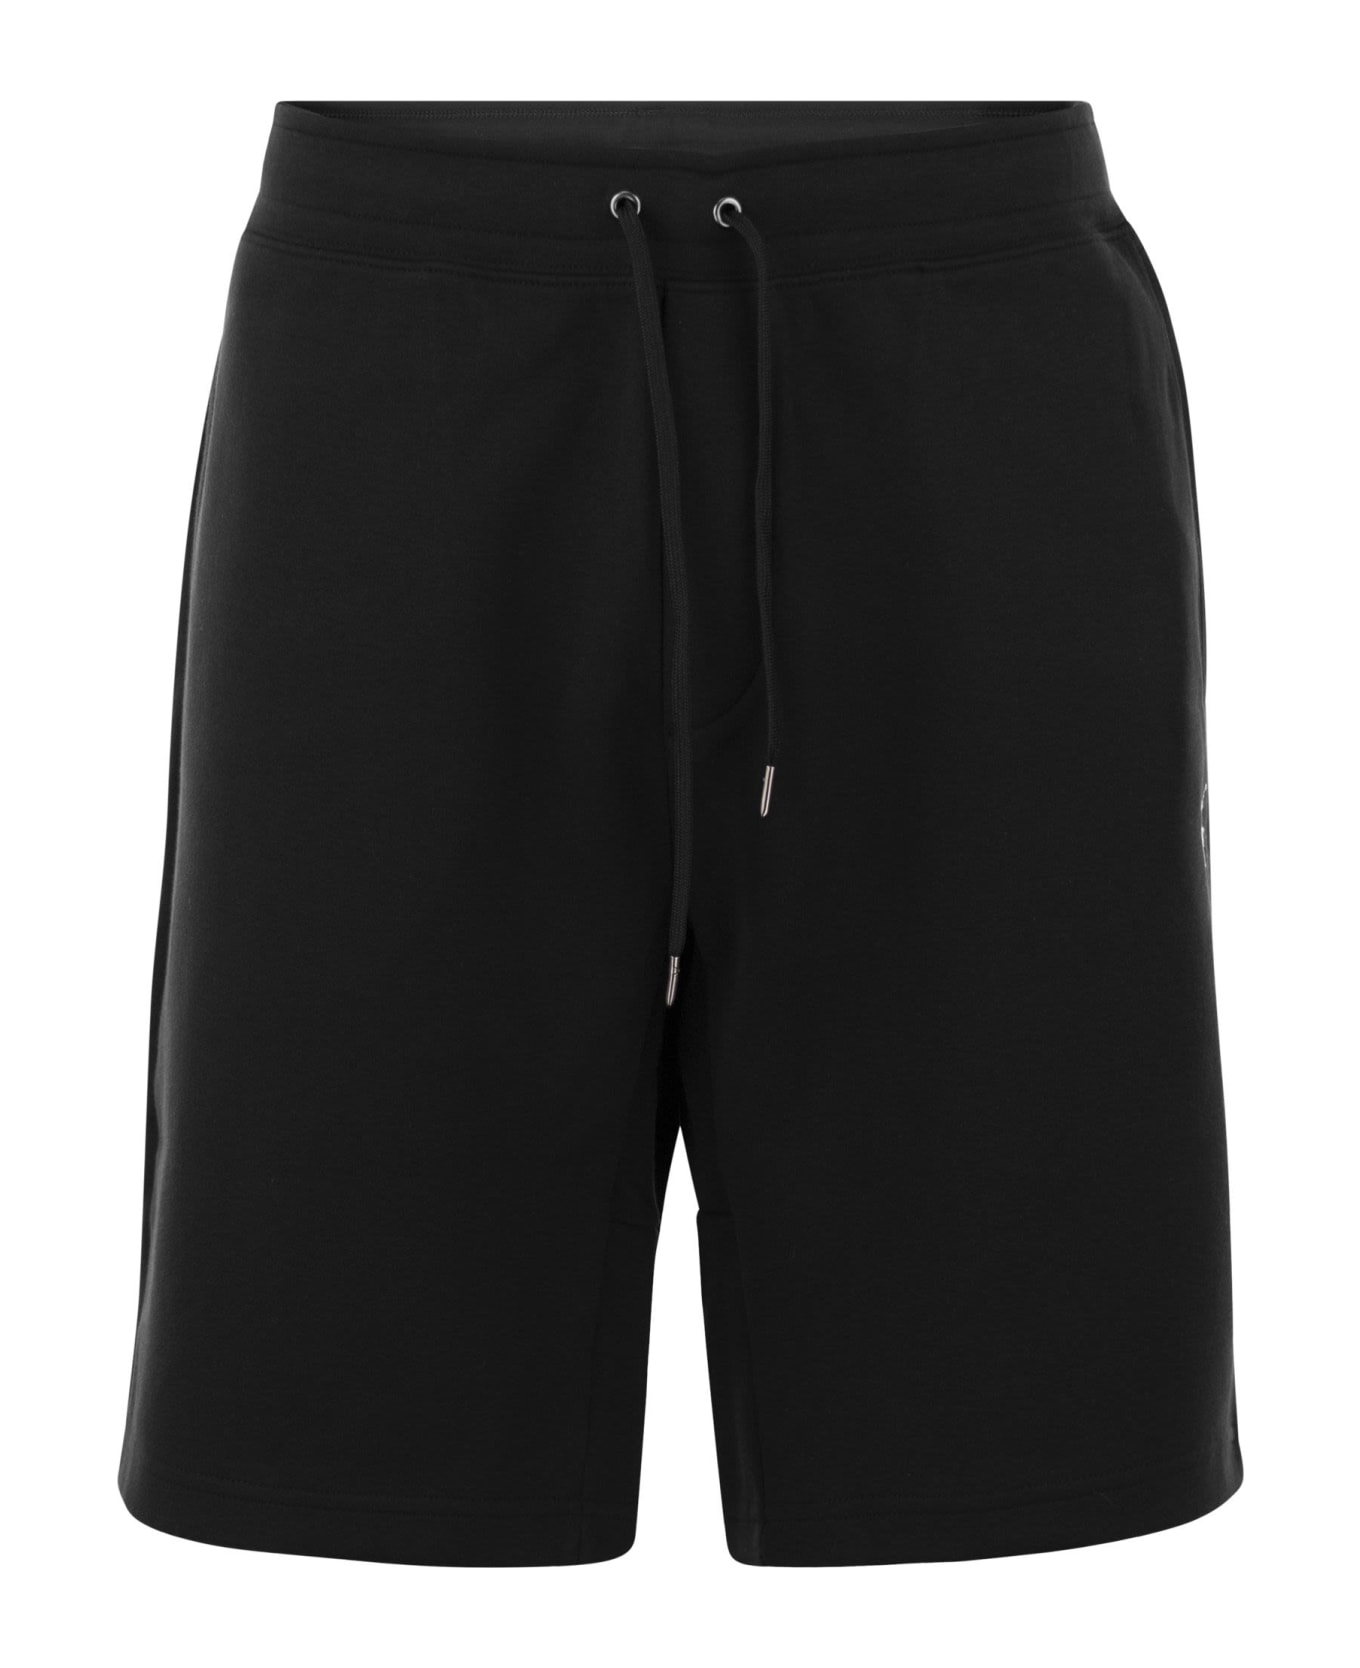 Polo Ralph Lauren Bermuda Shorts With Pony - Black